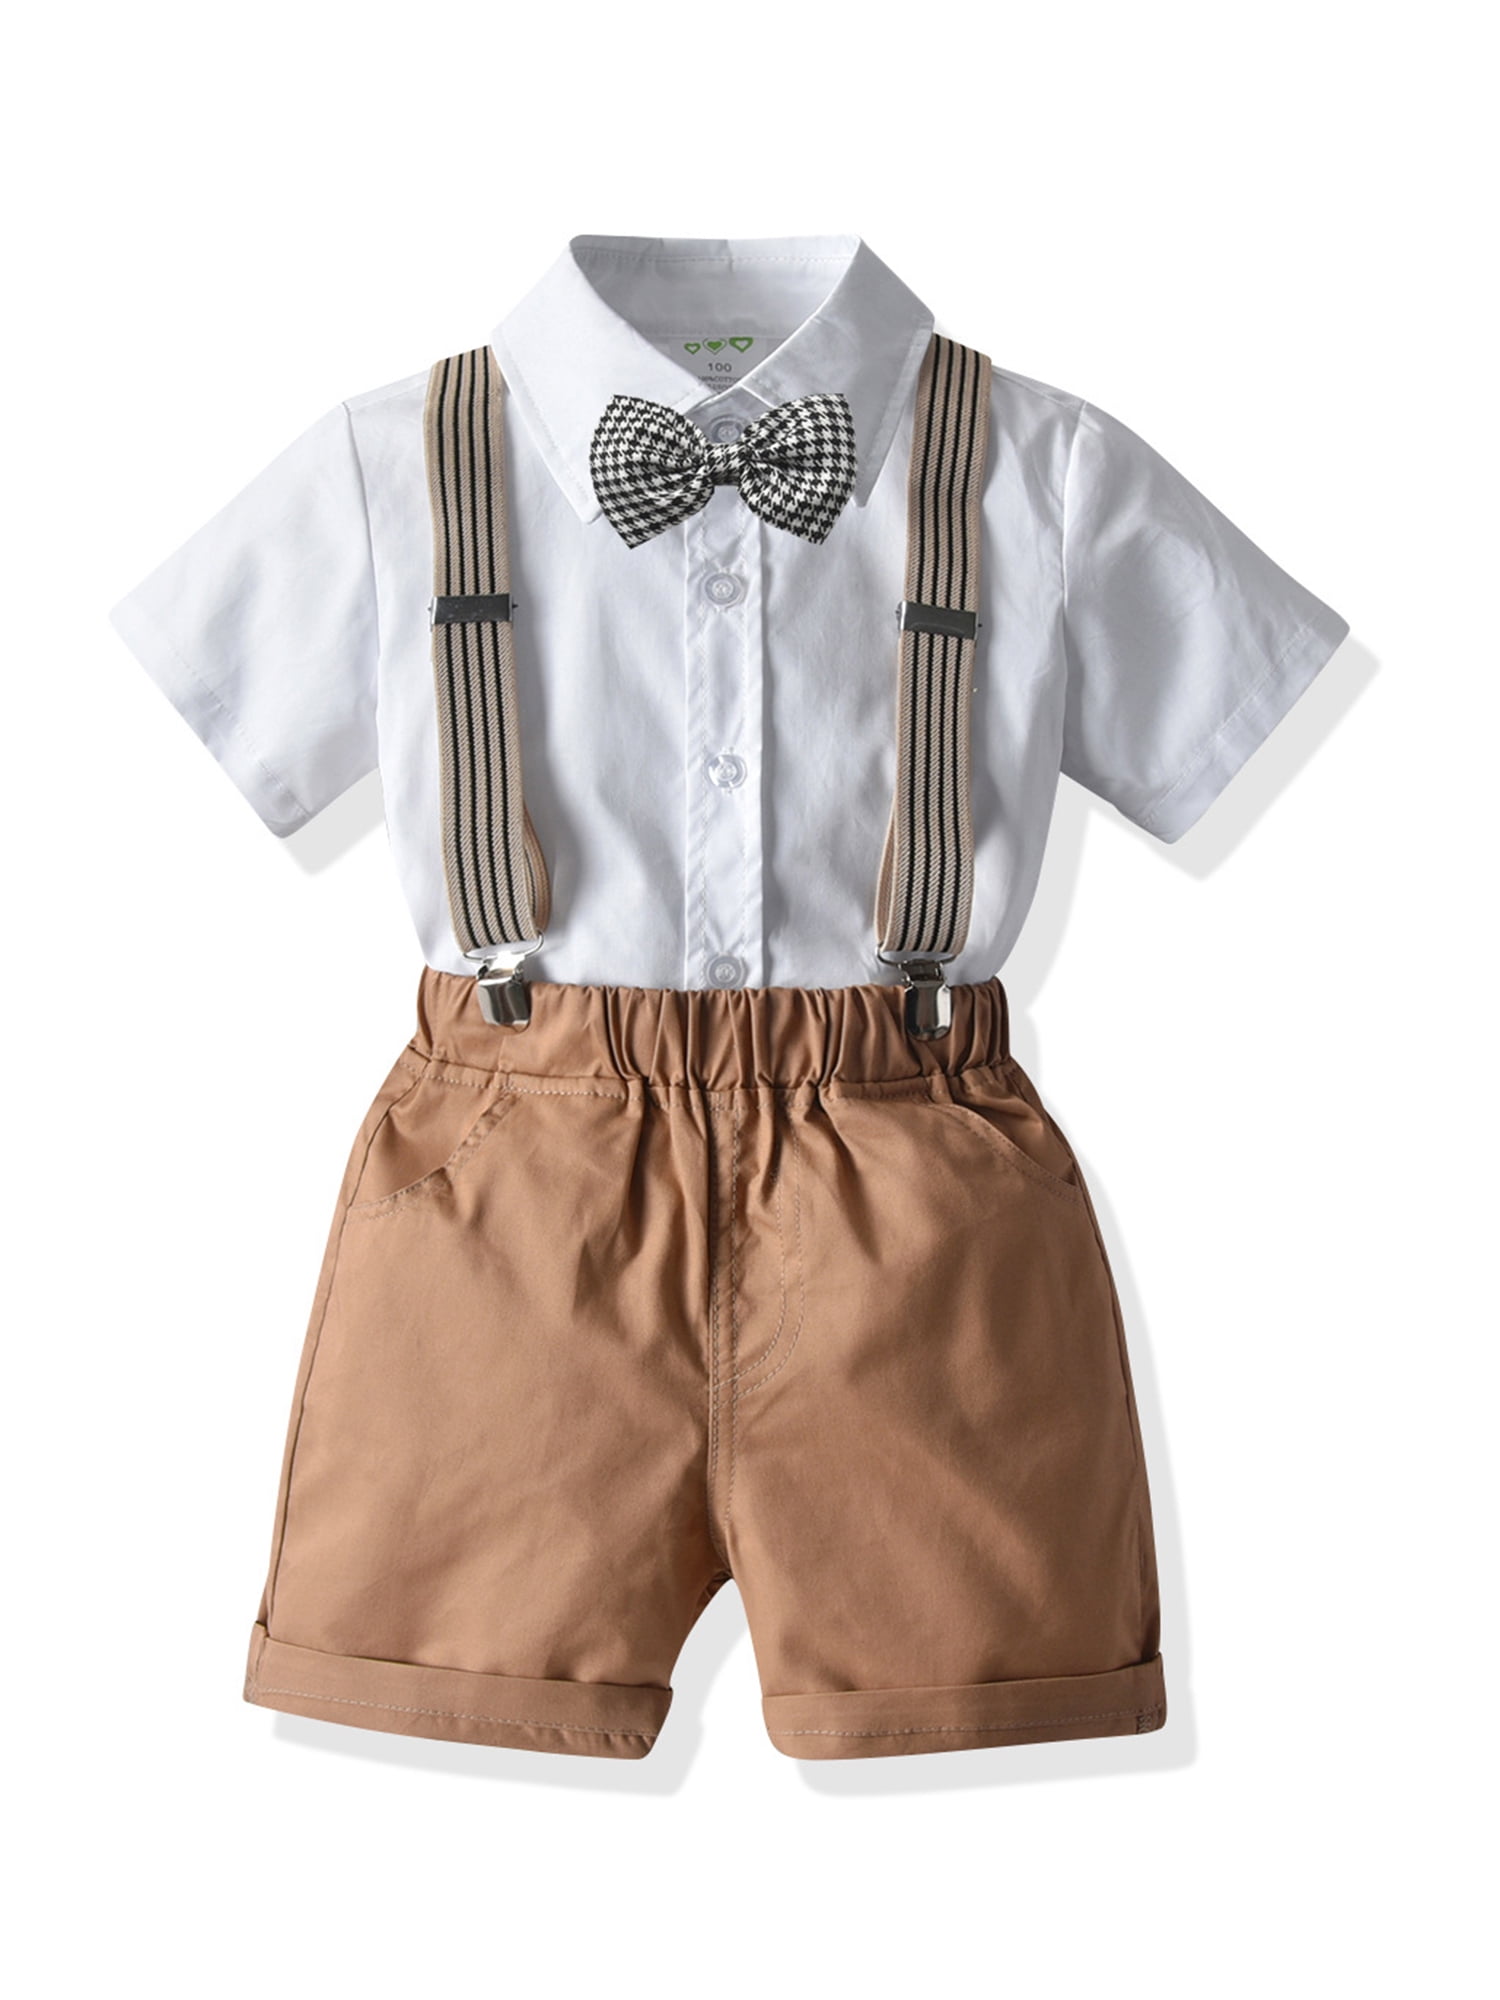 Bow Tie Shorts Set Summer Casual Kids Boys Gentleman Outfit Short Sleeve Shirt 